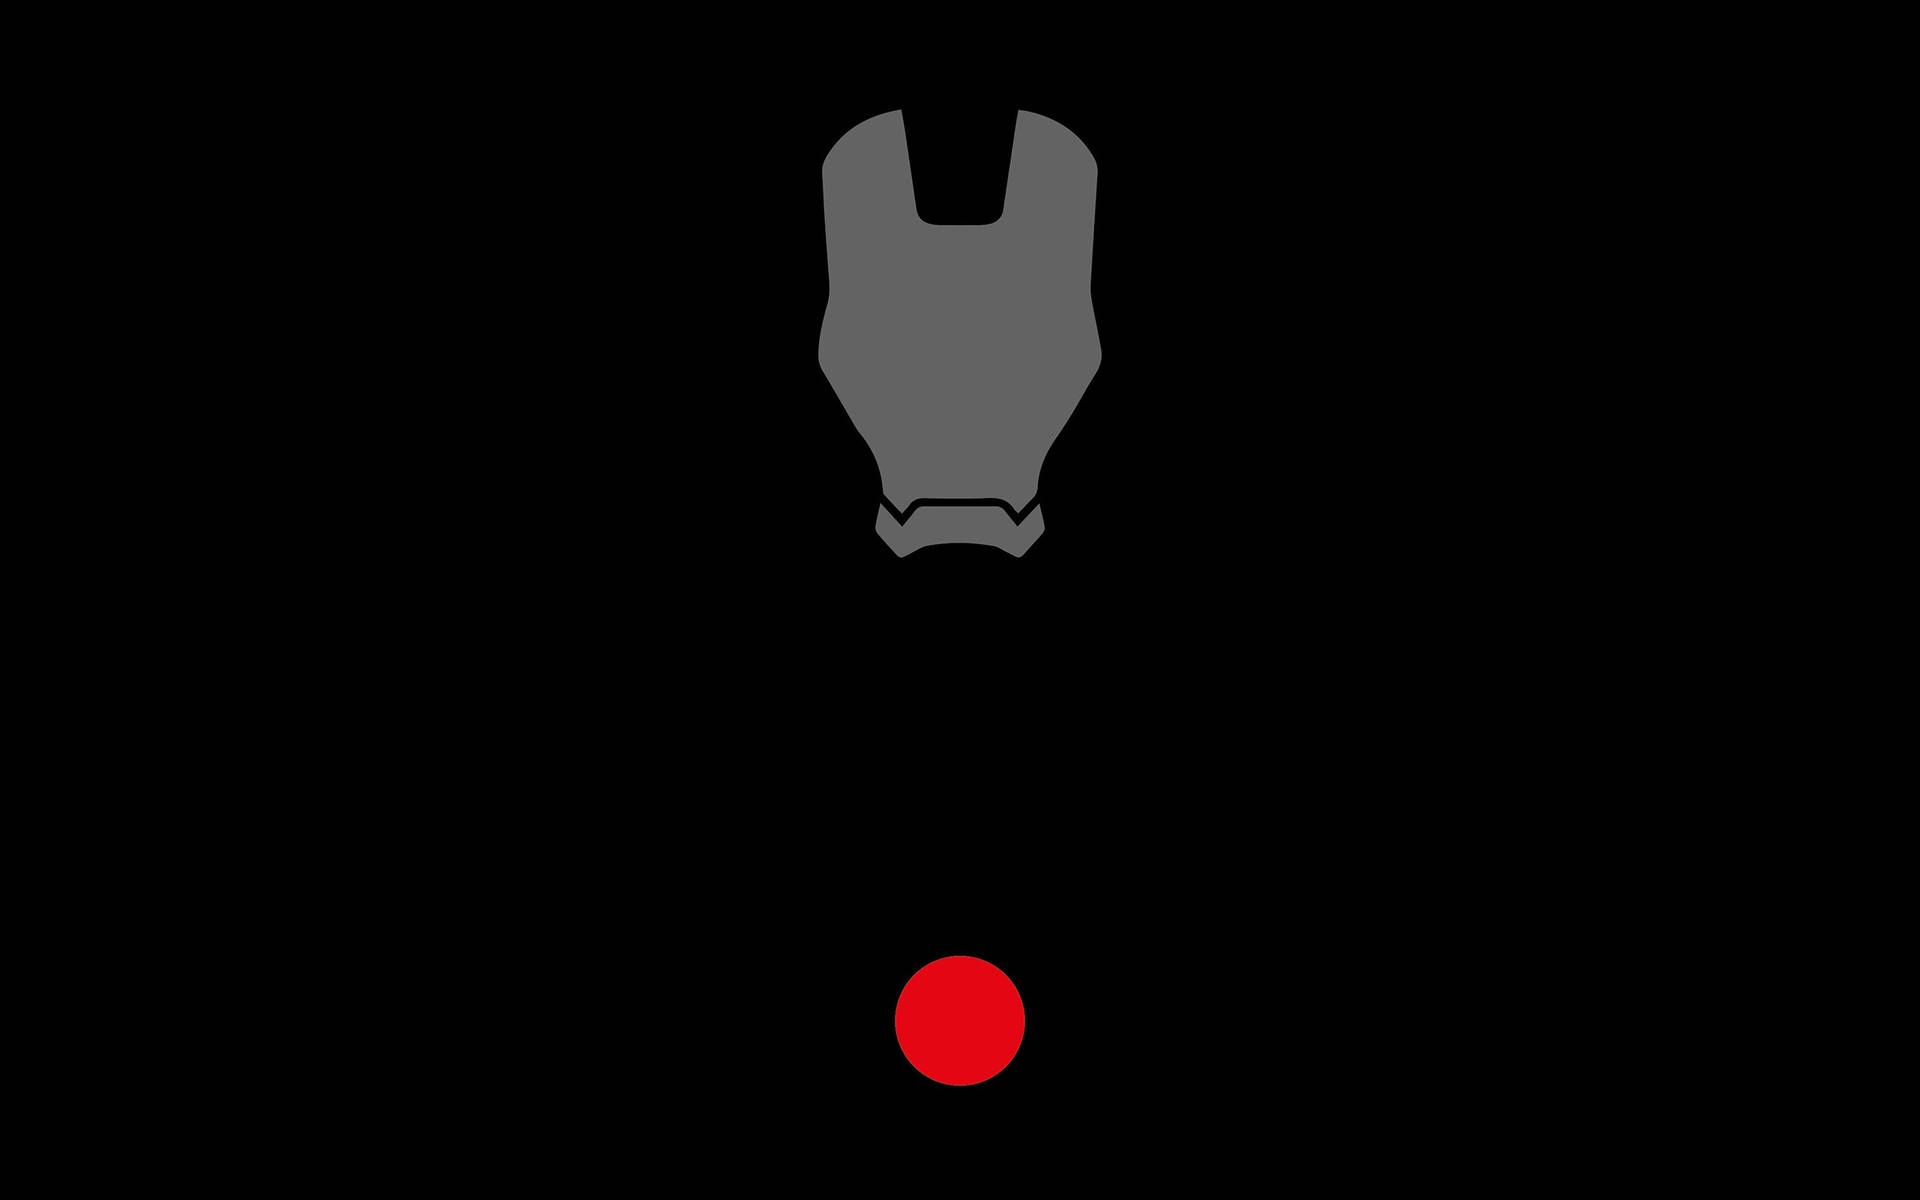 Faceless Iron Man Logo Wallpaper